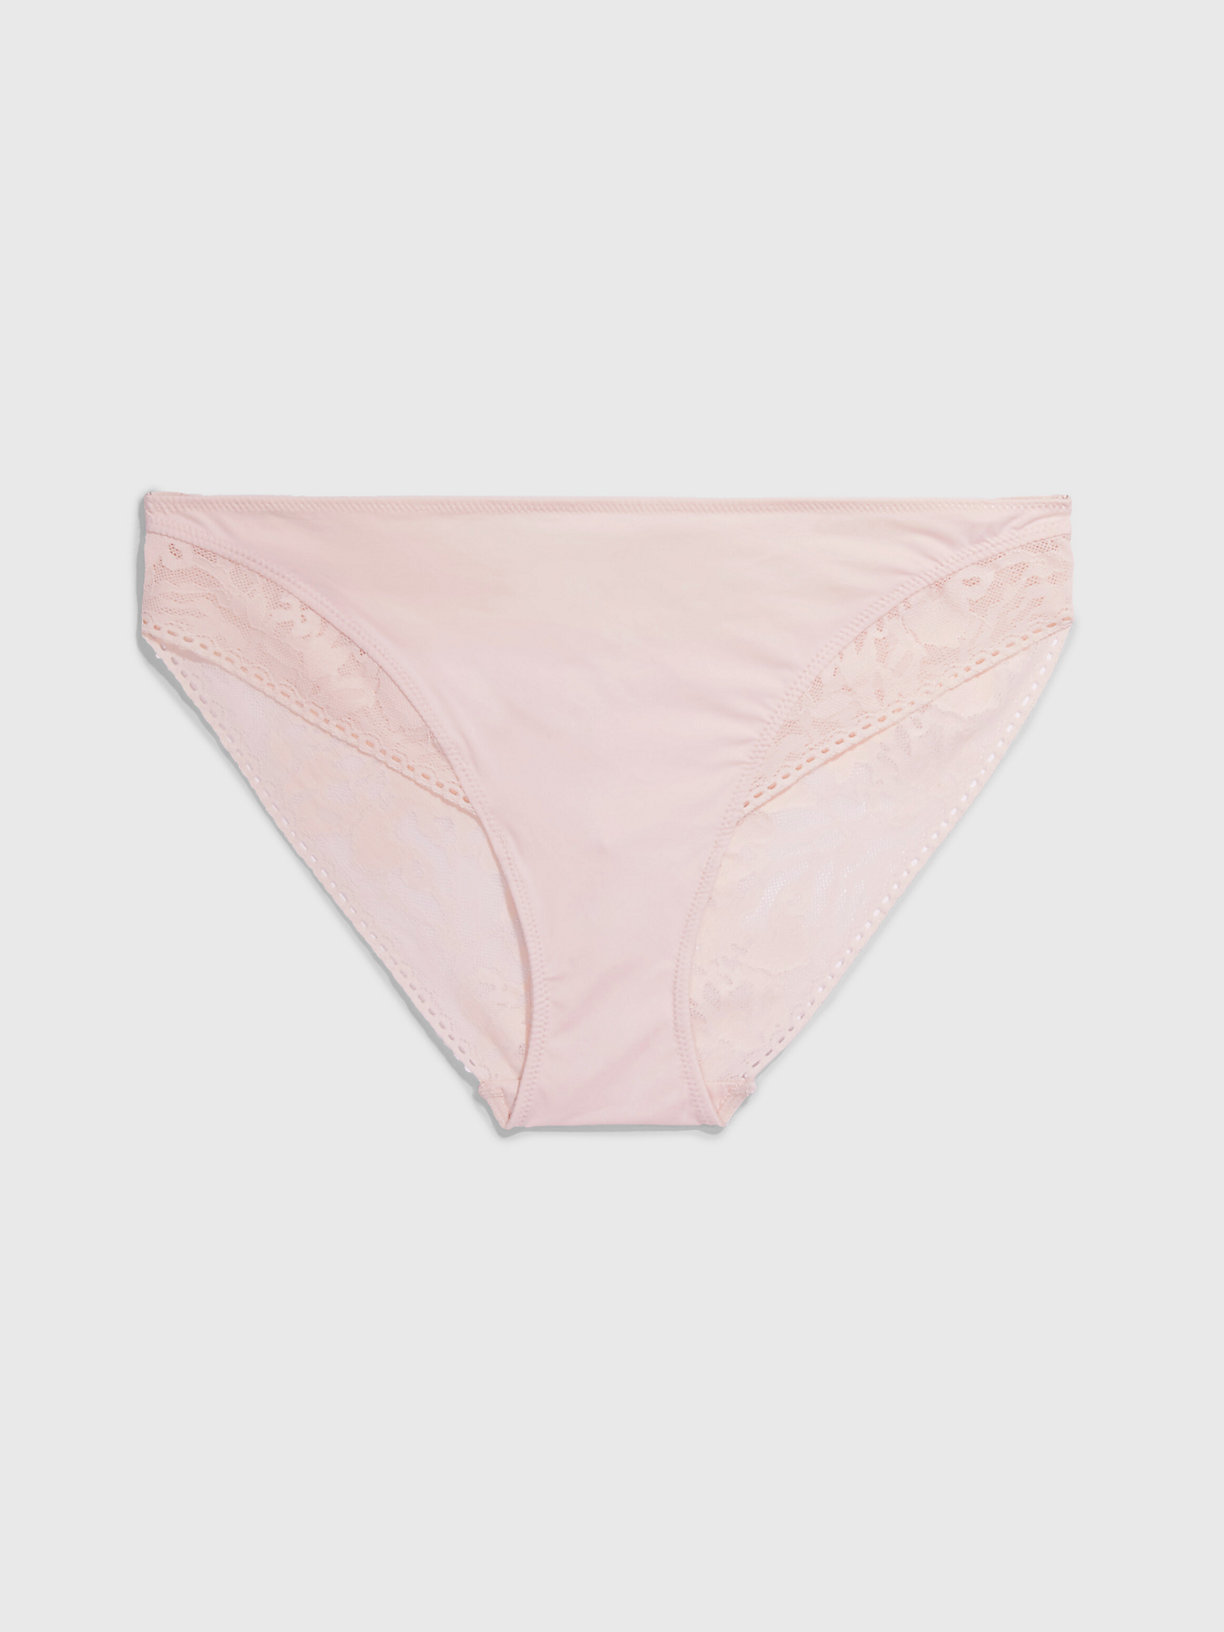 NYMPTHÂ€™S THIGH Bikini Briefs - Ultra Soft Lace for women CALVIN KLEIN